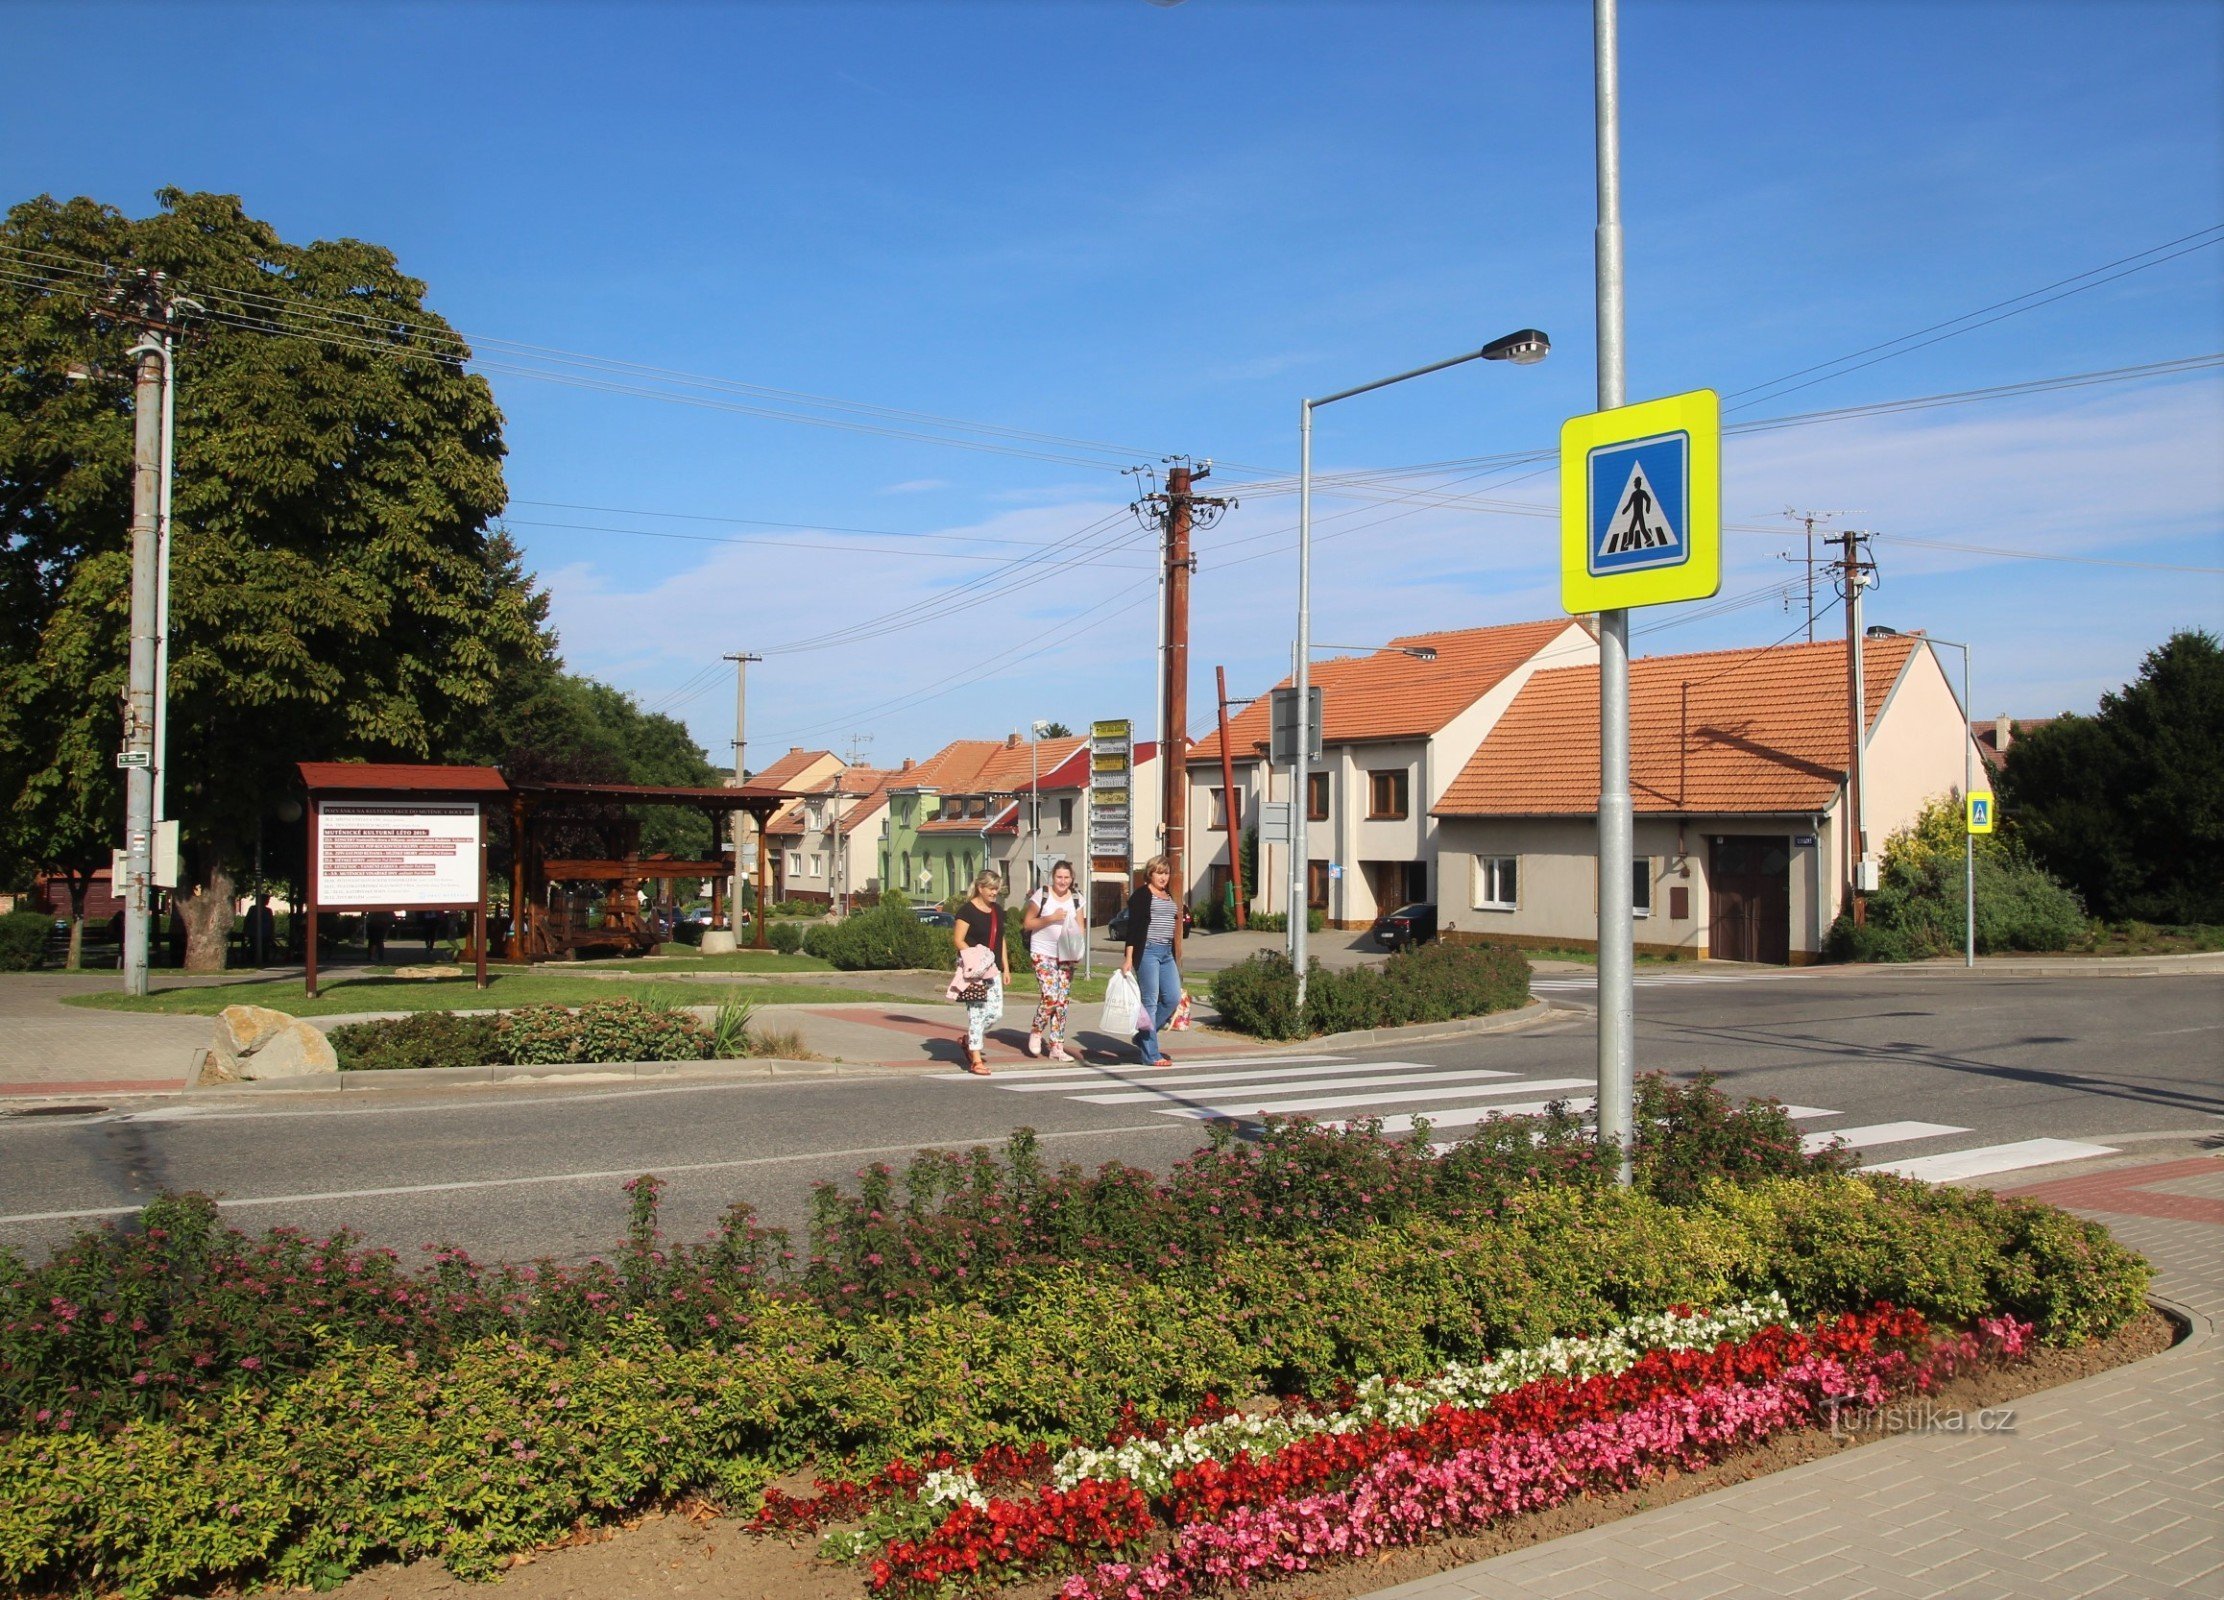 At the main Mütenice intersection